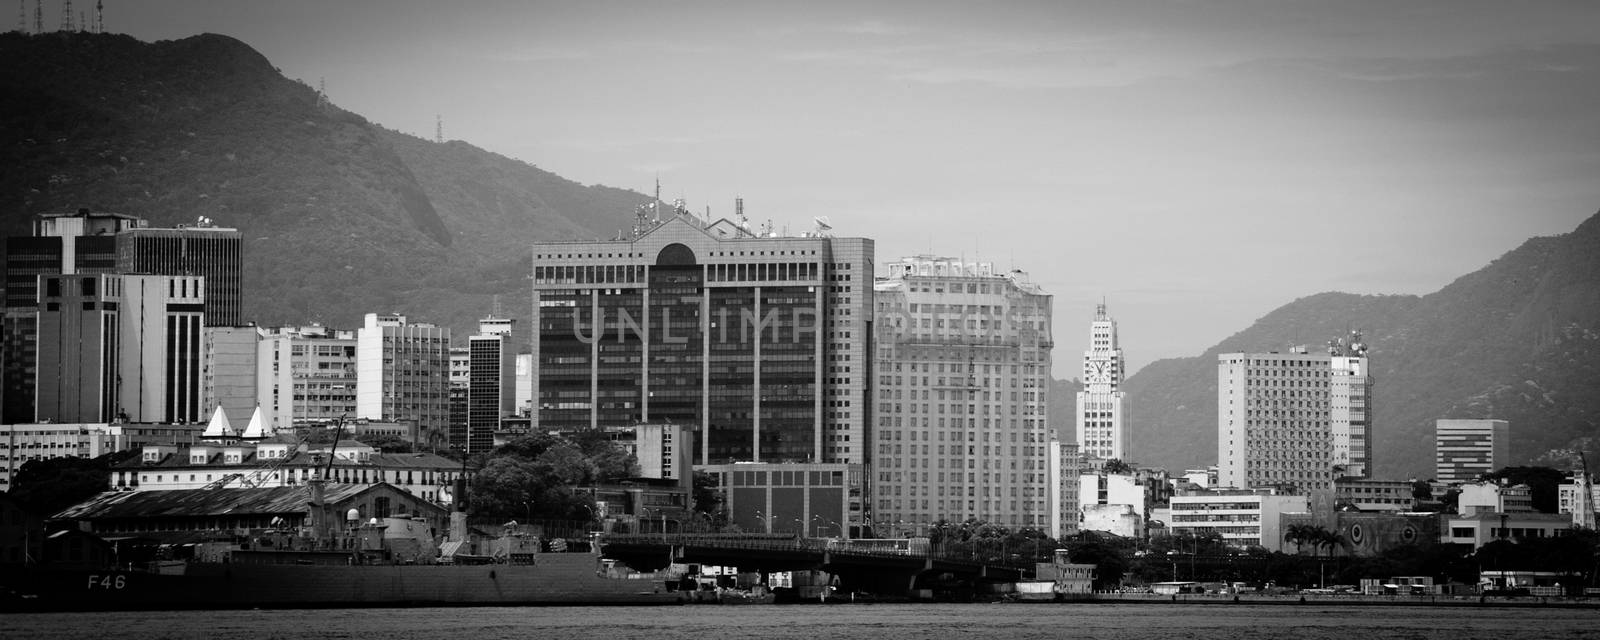 Rio de Janeiro city skyline by CelsoDiniz